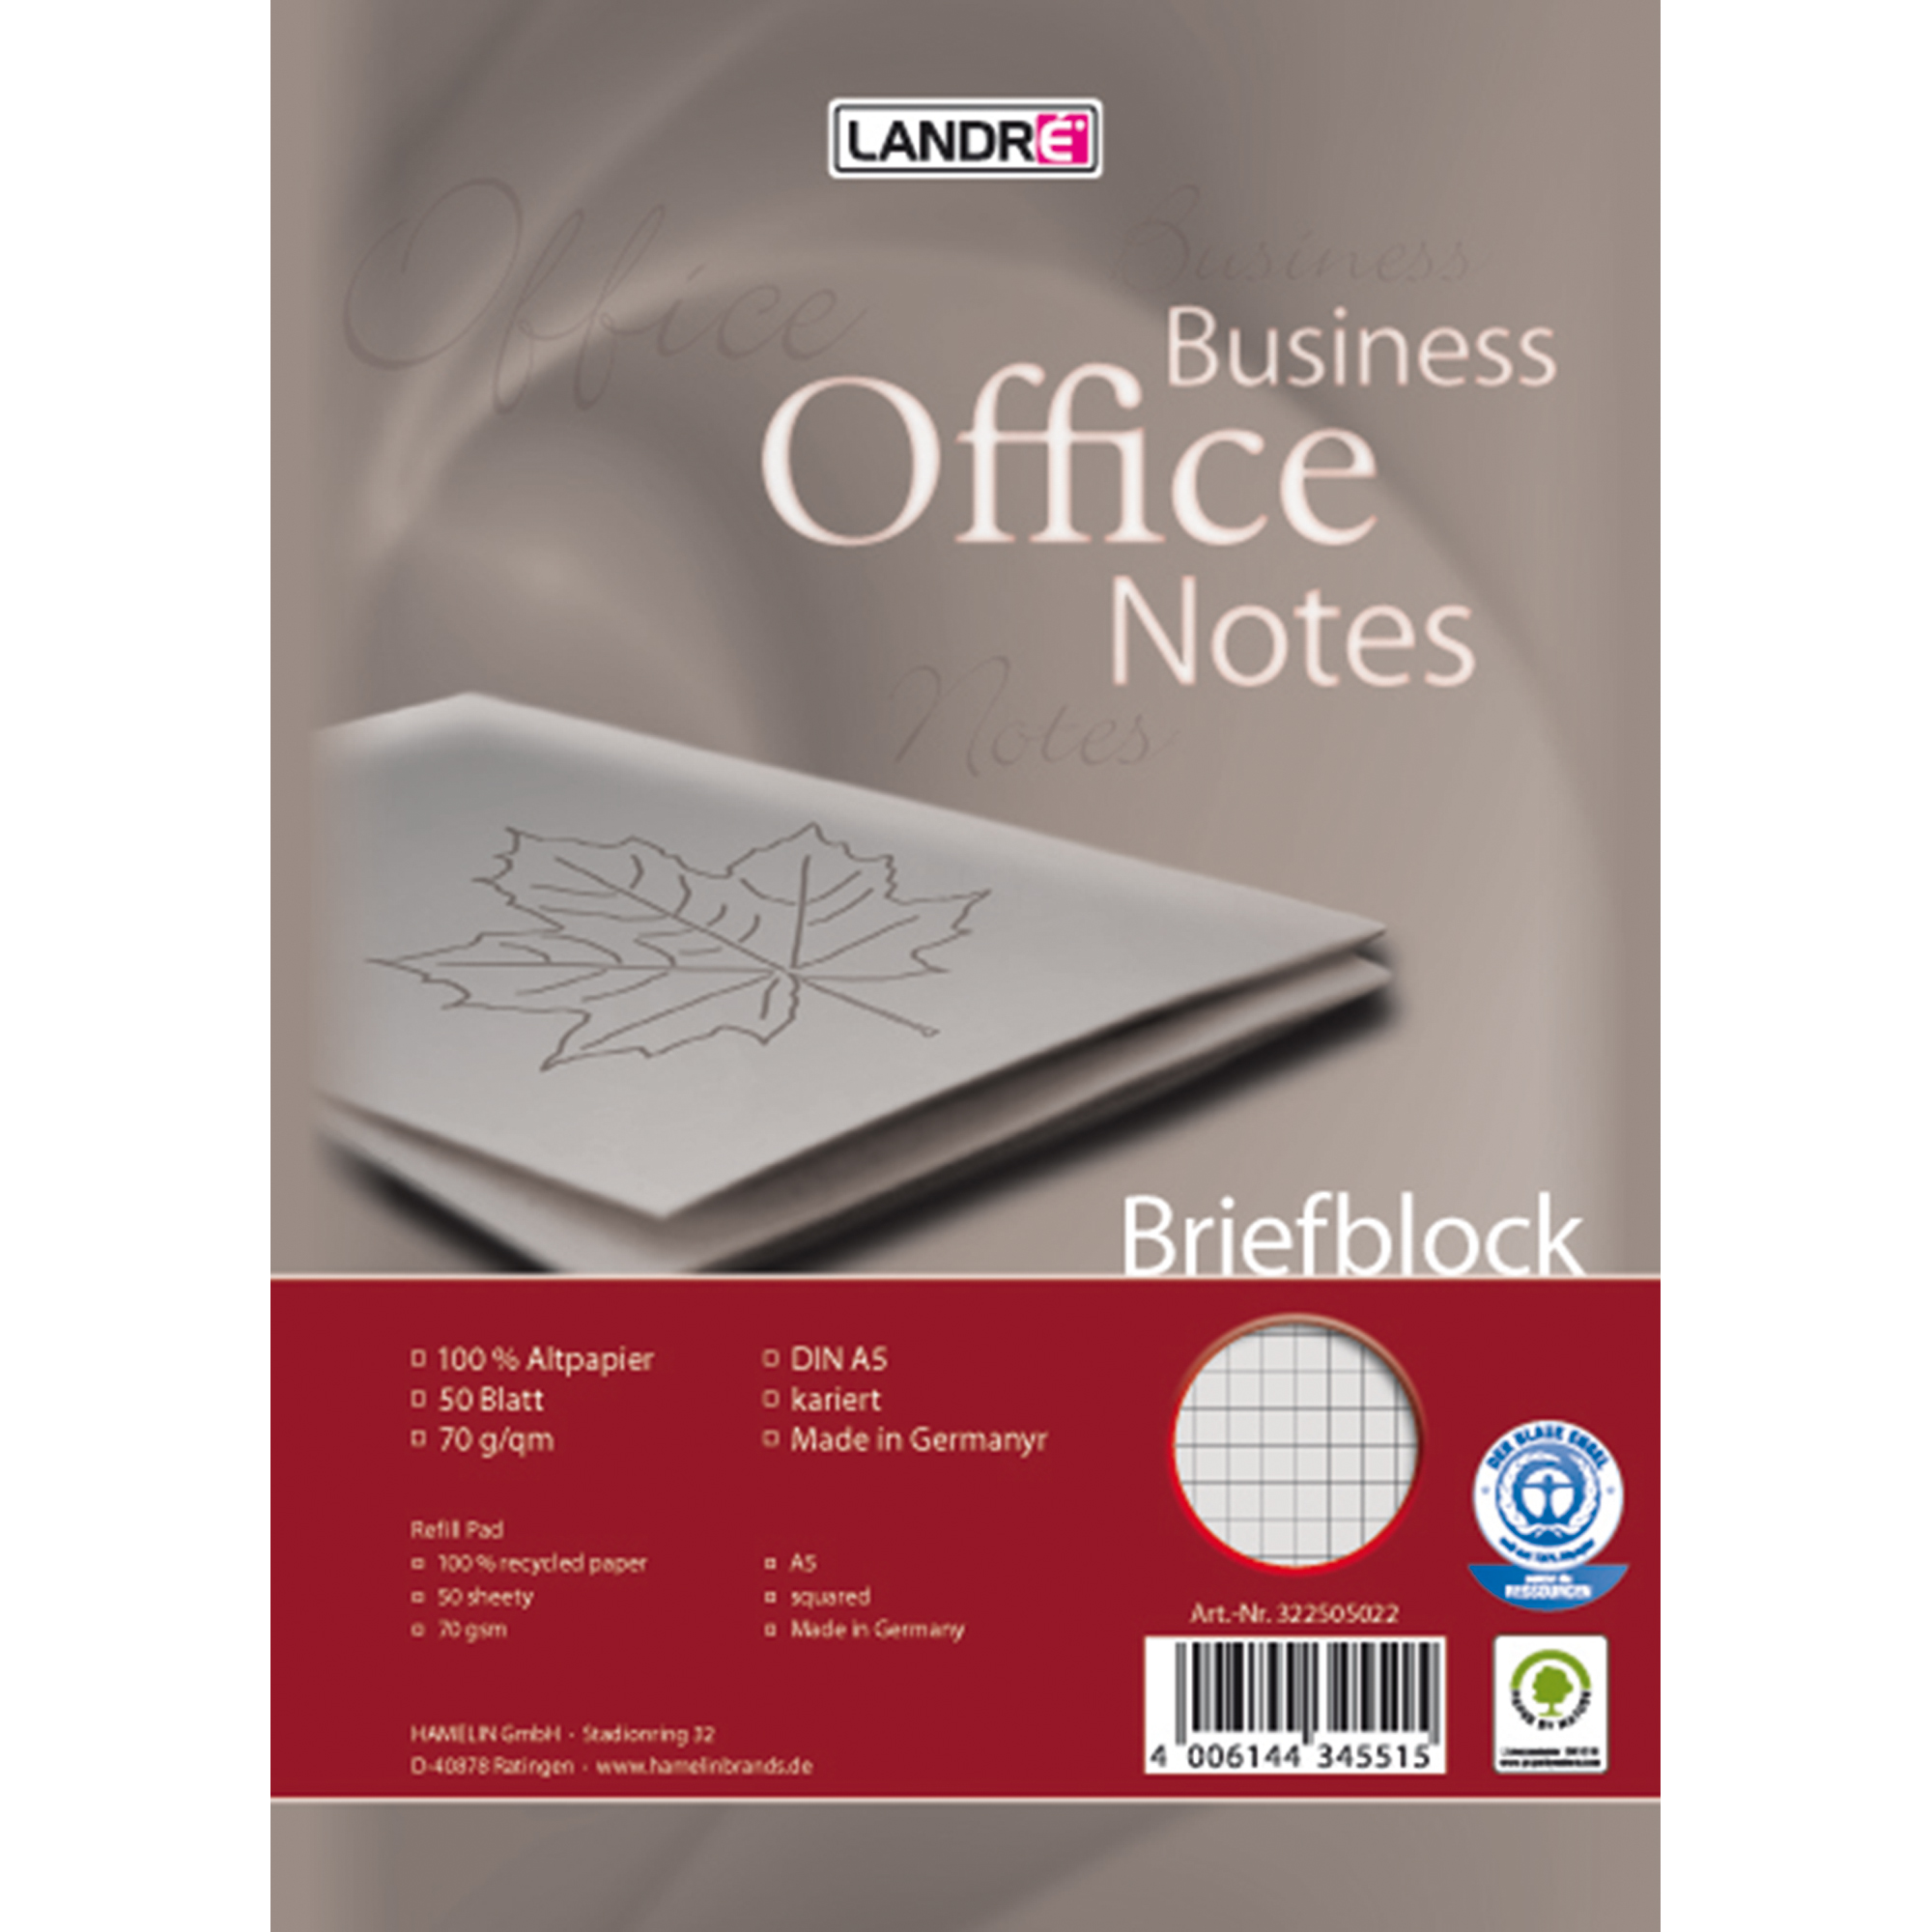 Landré Briefblock Business Office Notes DIN A4 Recyclingpapier kariert